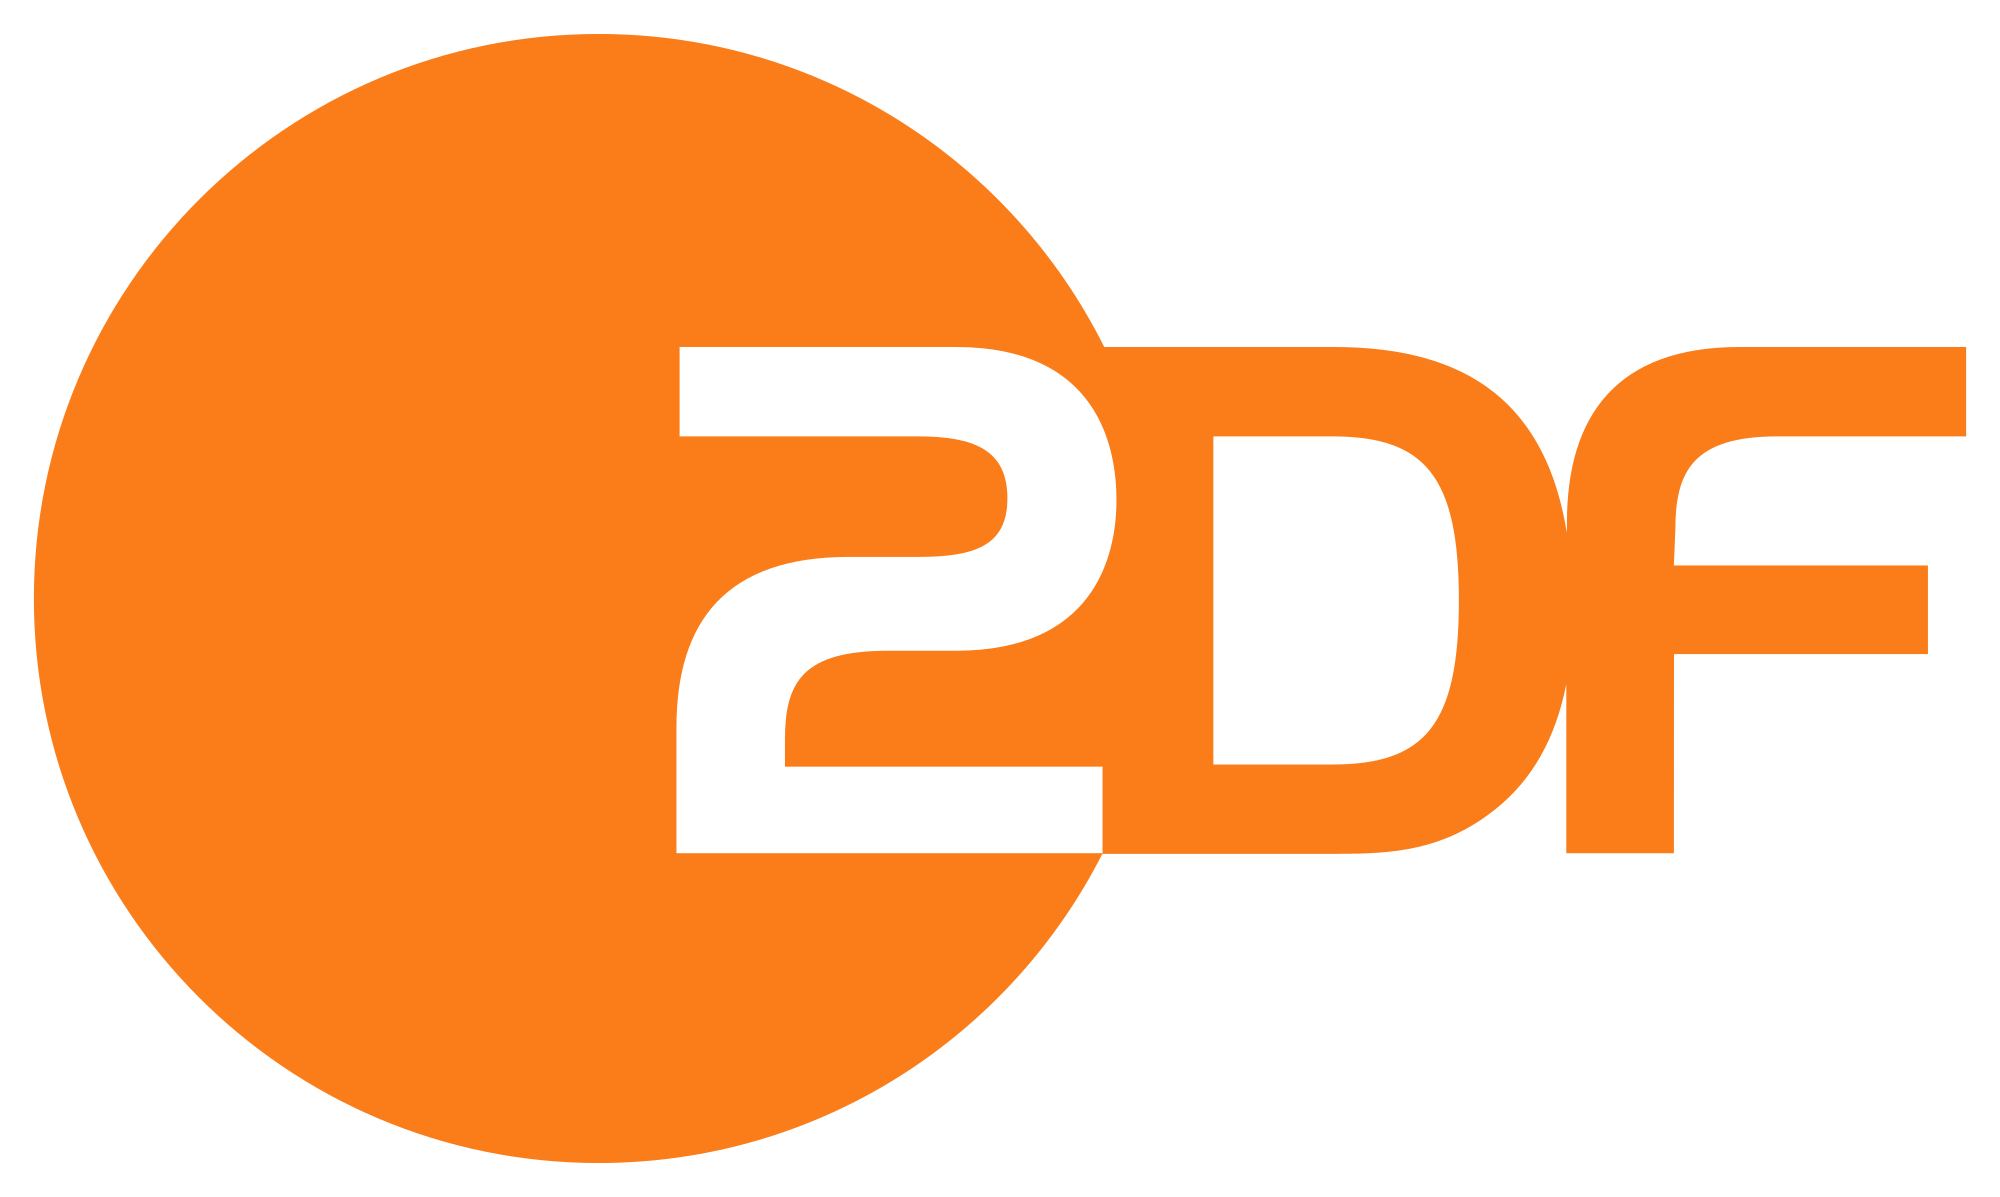 logos/zdf.png